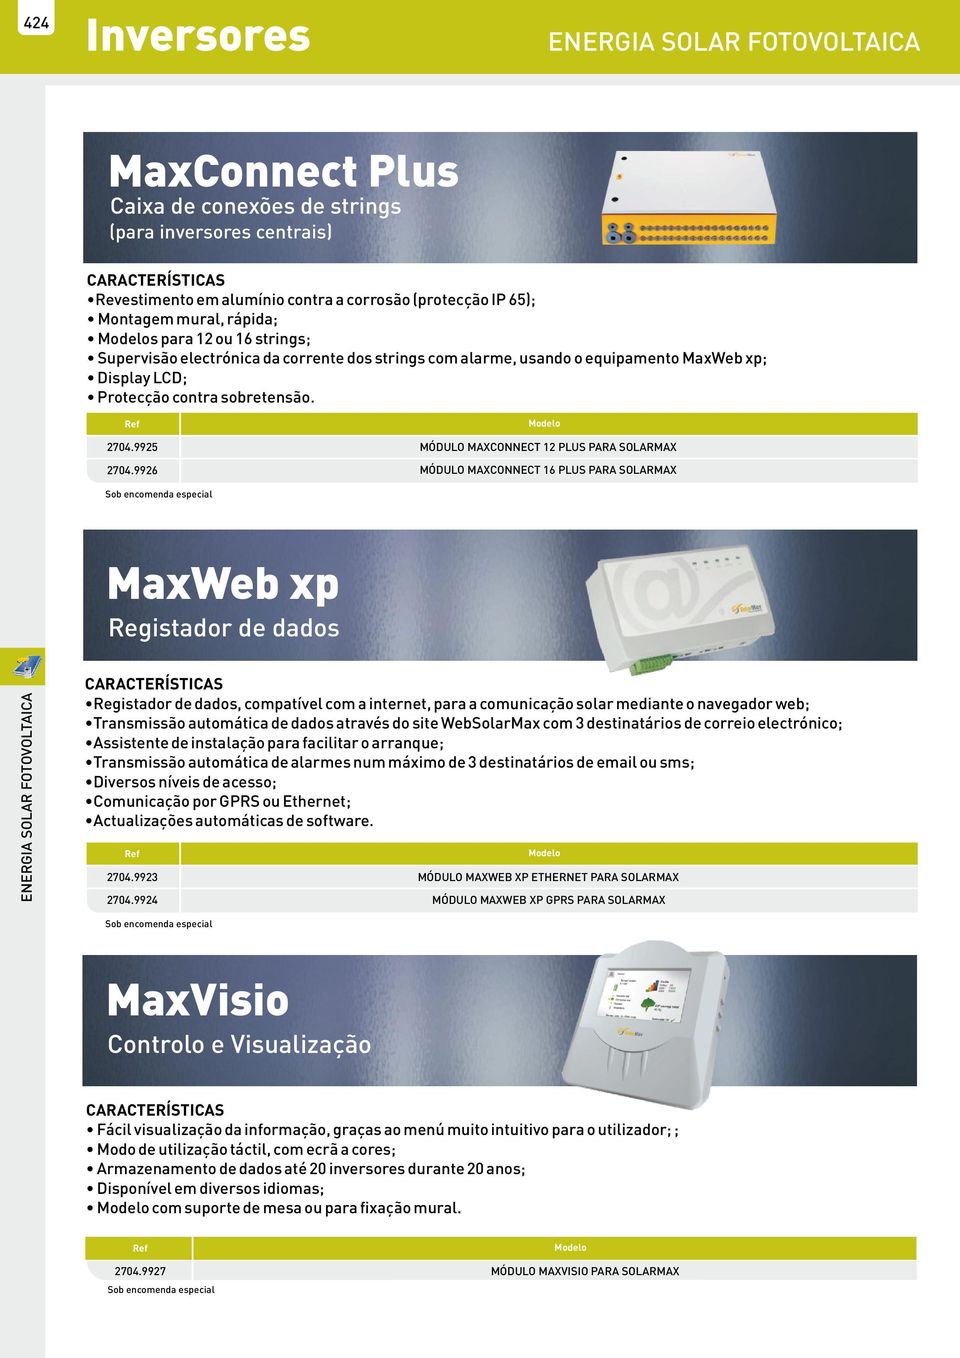 996 MÓDULO MAXCONNECT 1 PLUS PARA SOLARMAX MÓDULO MAXCONNECT 16 PLUS PARA SOLARMAX Sob encomenda especial MaxWeb xp Registador de dados CARACTERÍSTICAS Registador de dados, compatível com a internet,